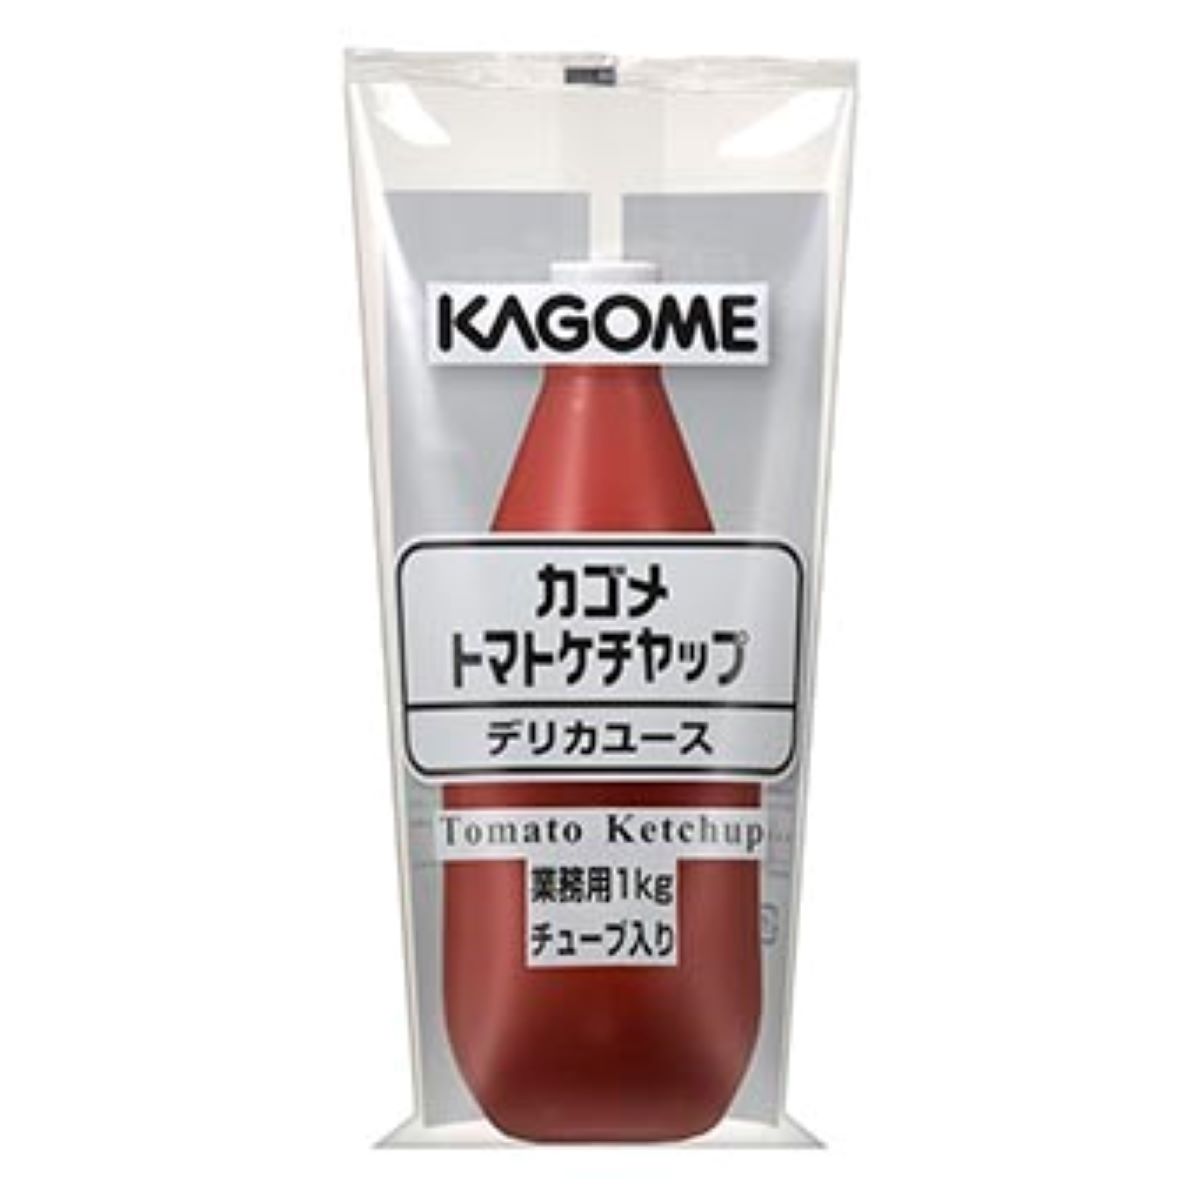 KAGOME カゴメ トマトケチャップデリ